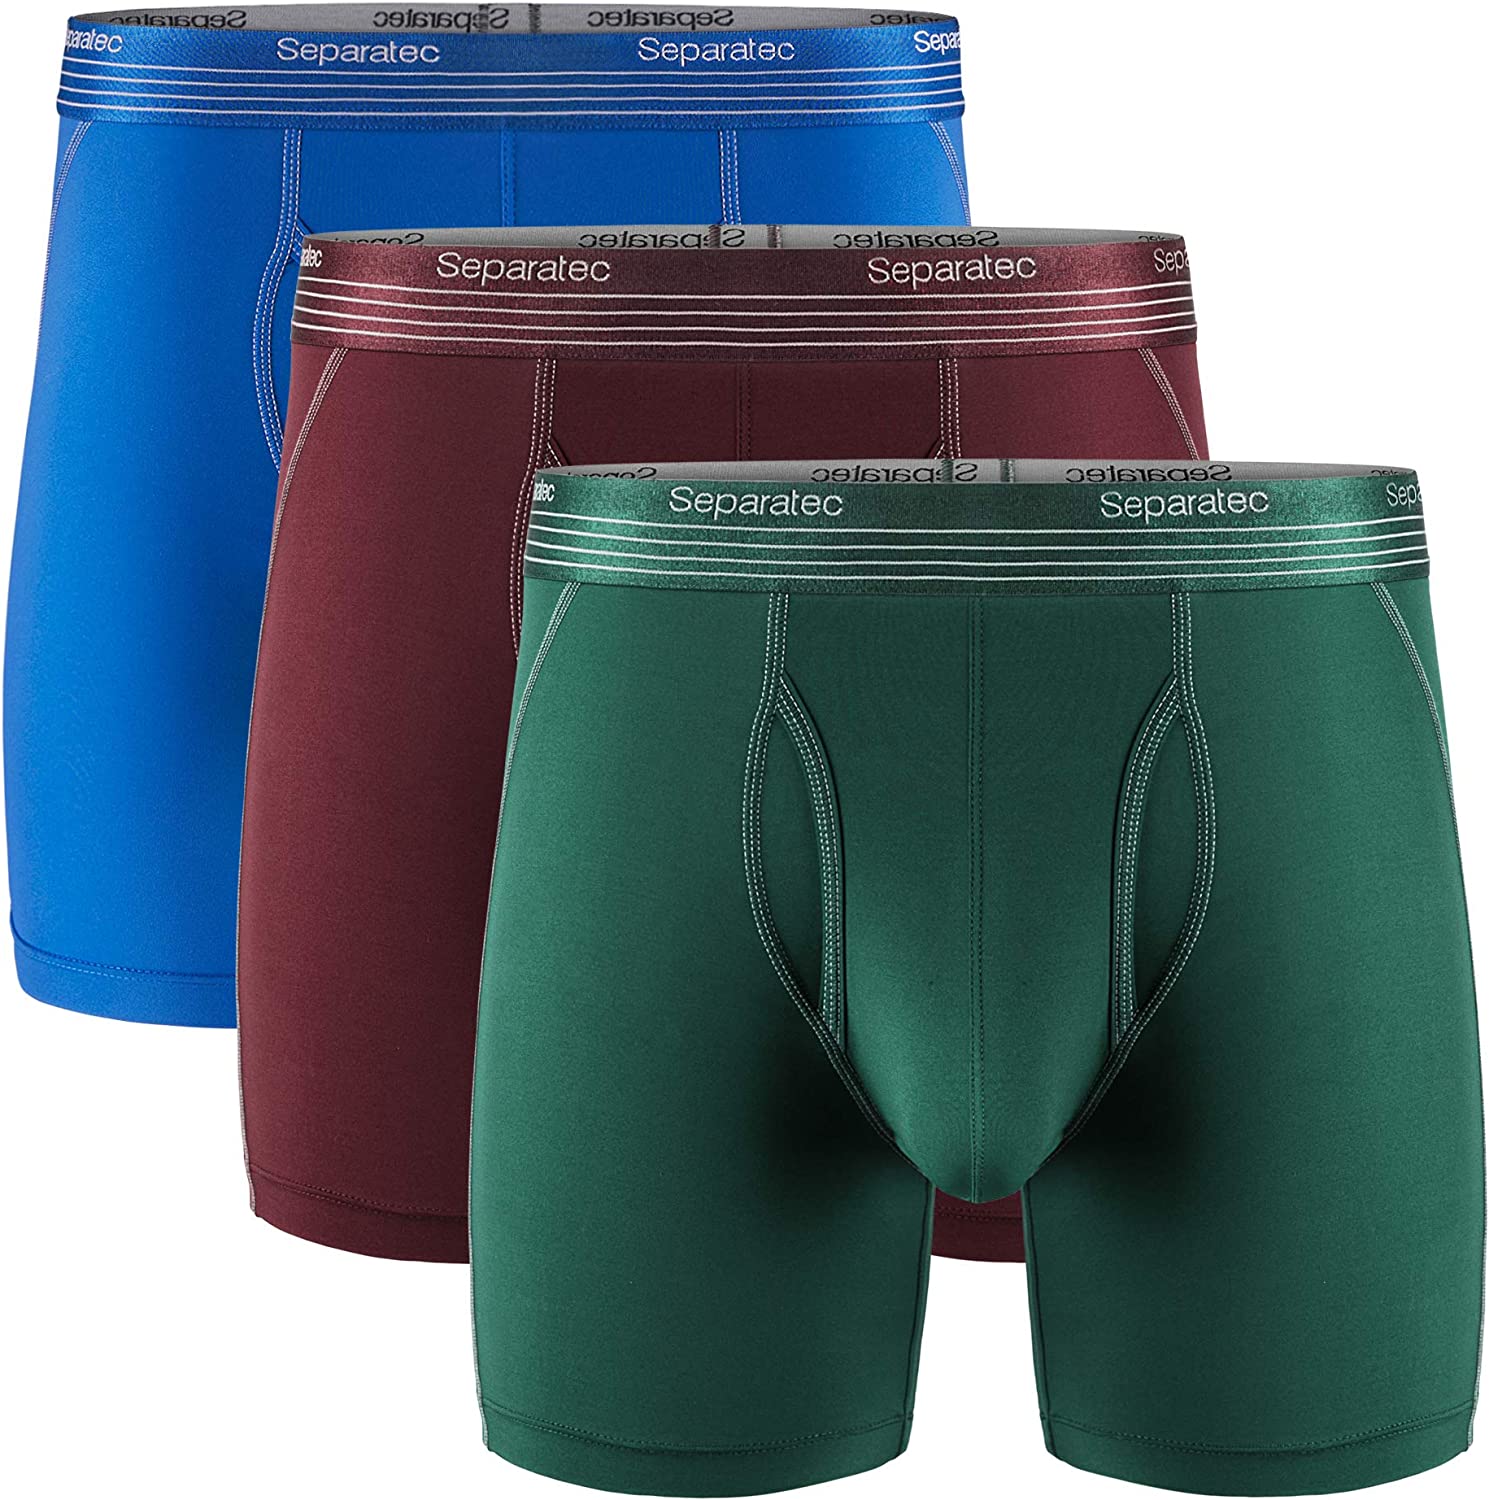 Separatec Dual Pouch Mens Underwear Quick Dry Boxer Comoros